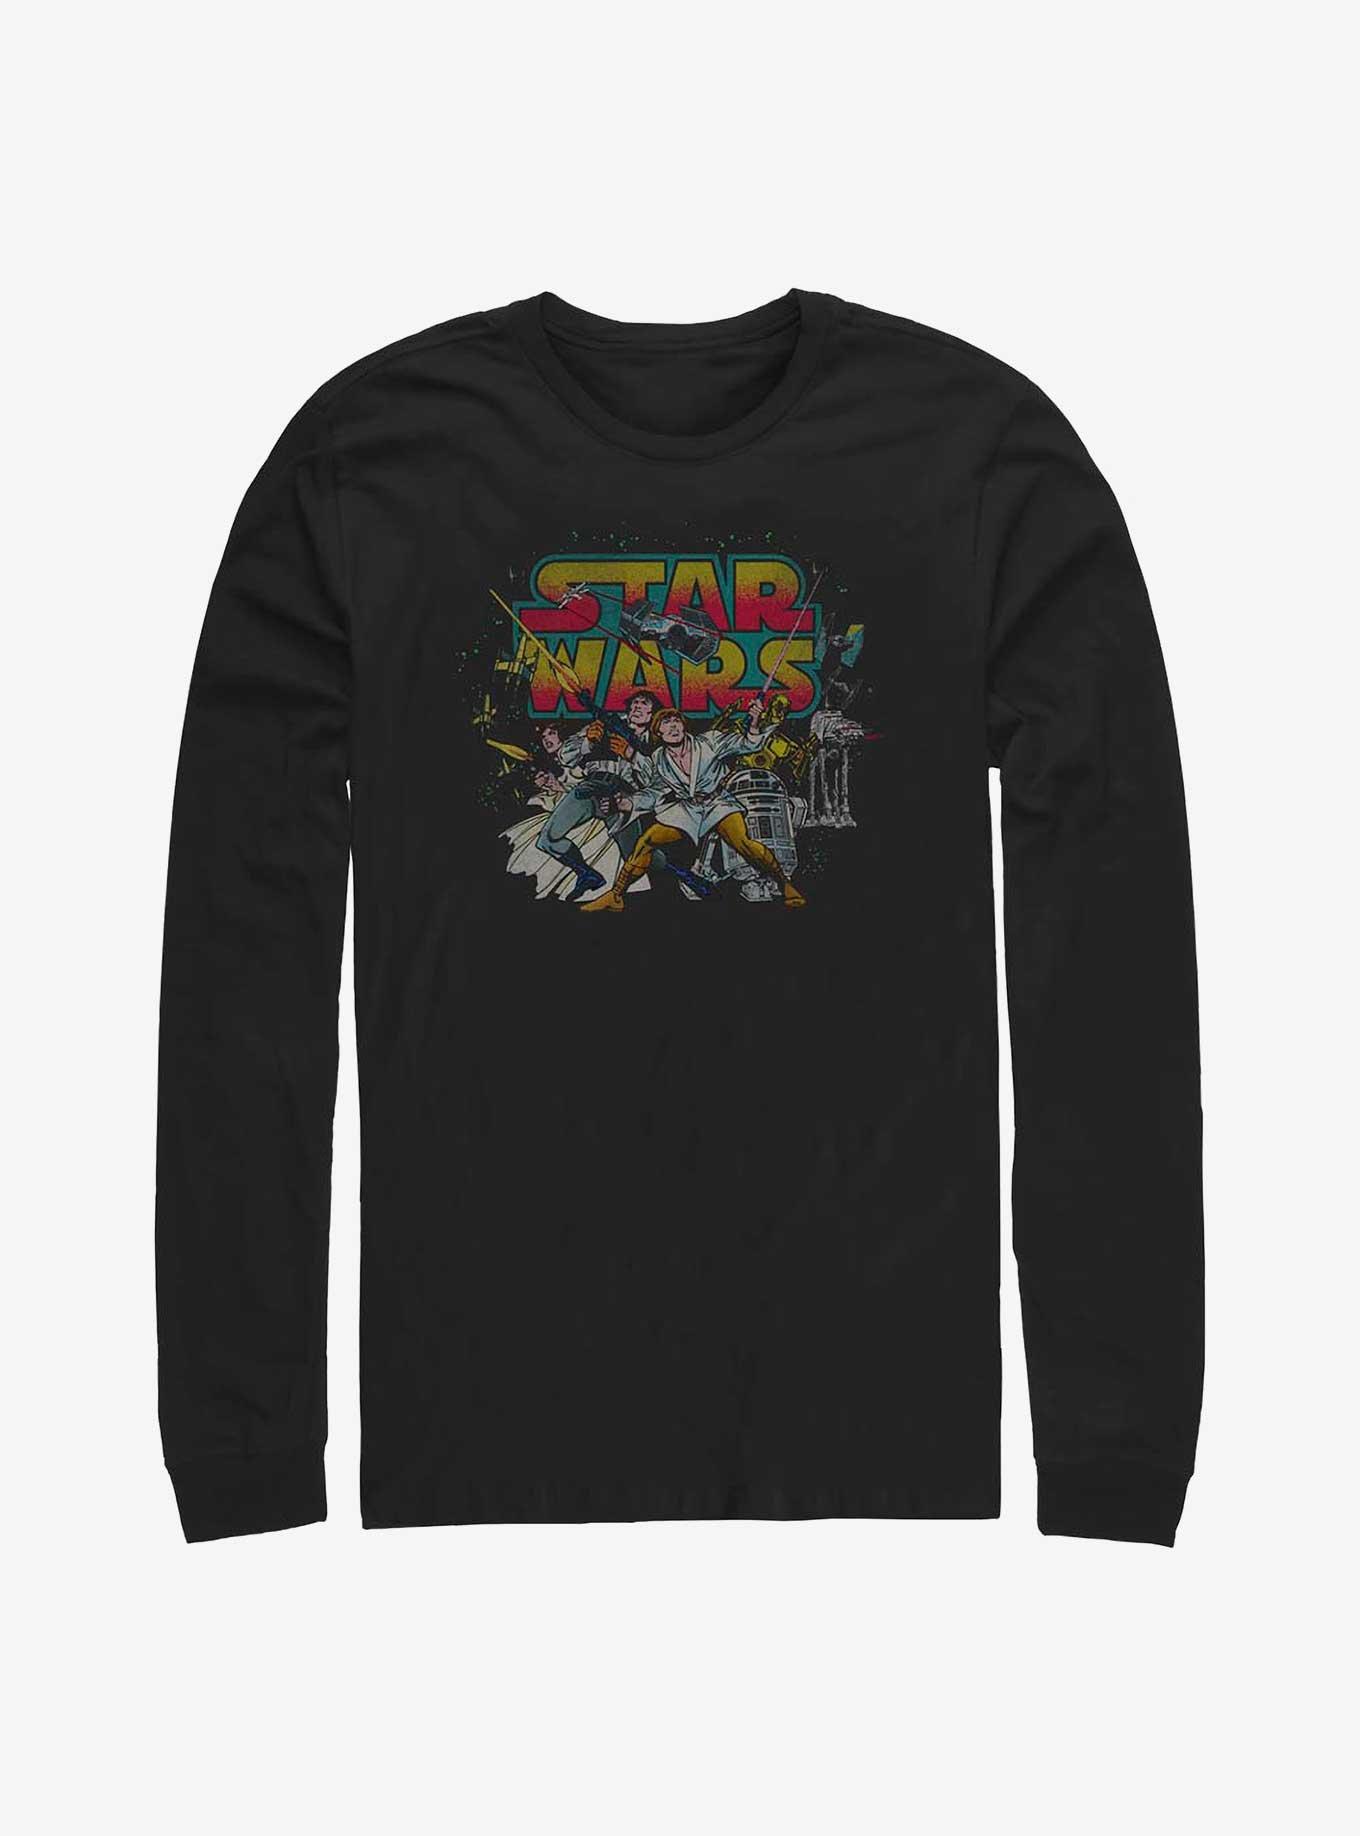 Star Wars Comic Wars Long-Sleeve T-Shirt, BLACK, hi-res